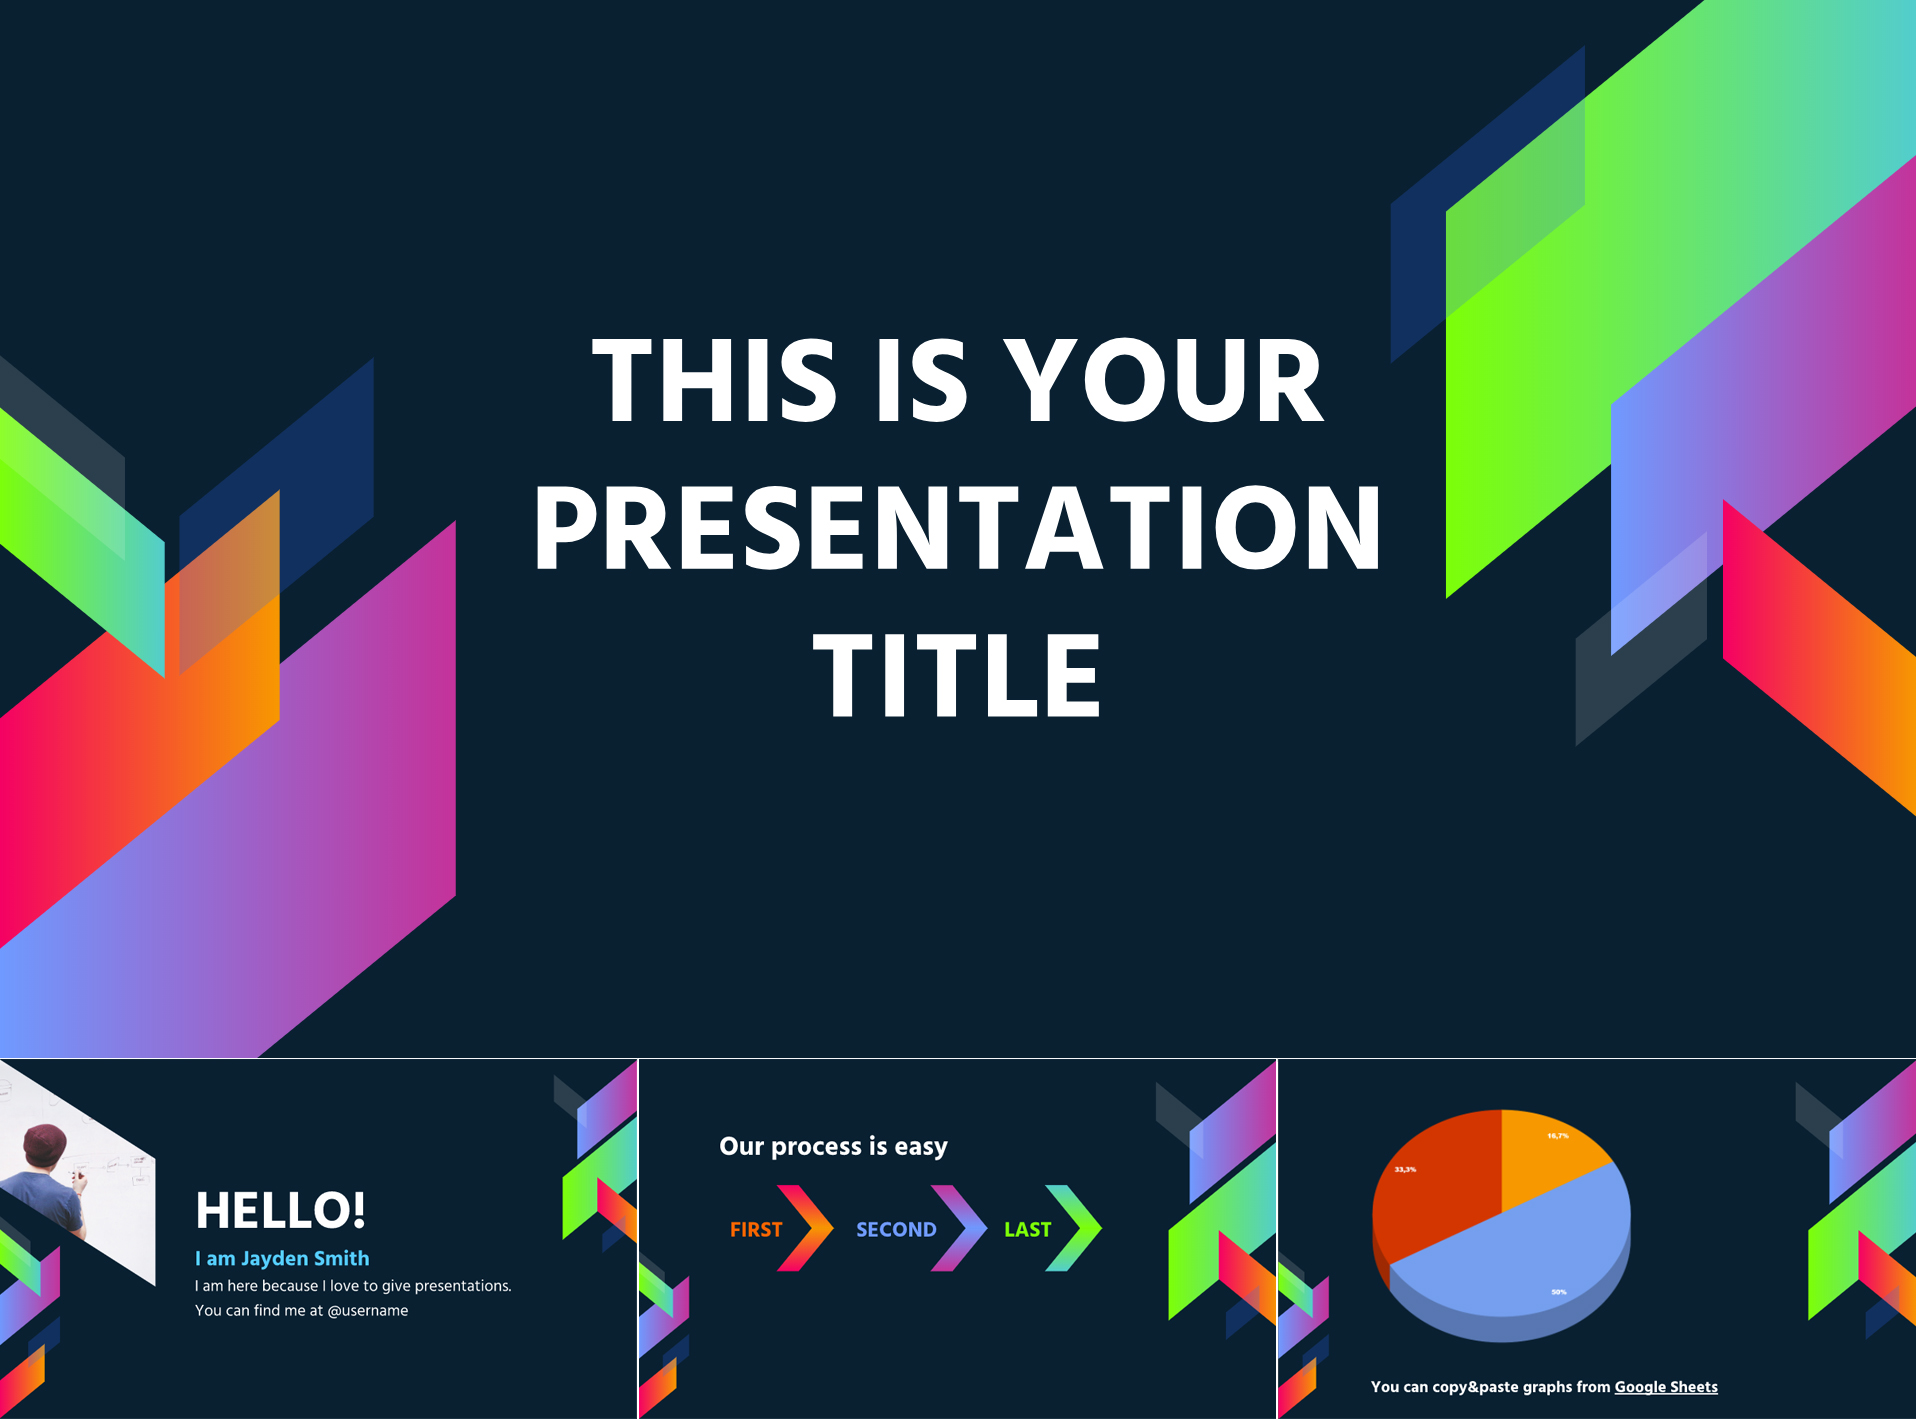 Google Slides Templates For Your Next Presentation